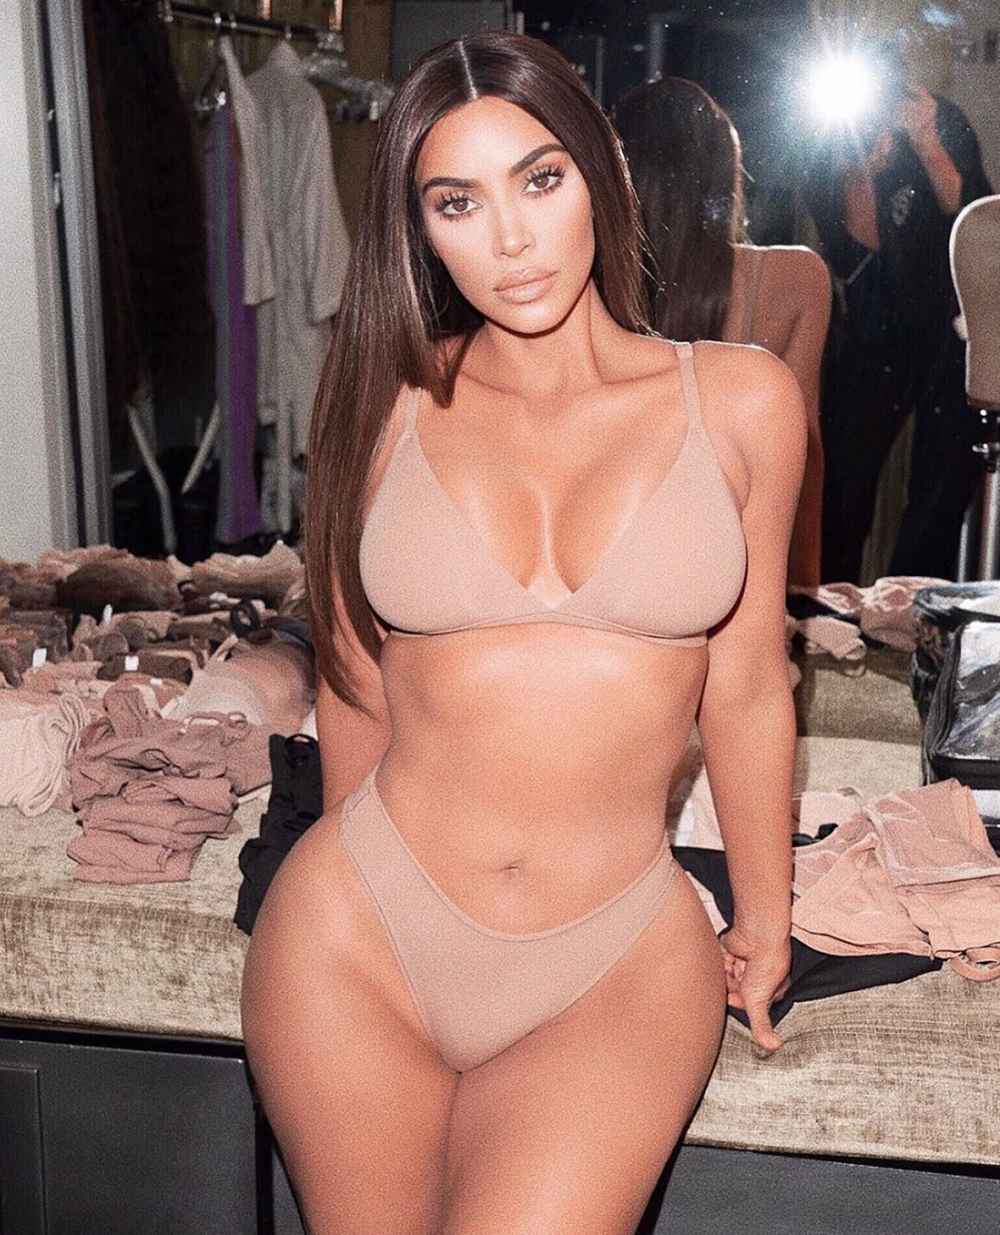 Kim Kardashian poses with NO underwear or bra in see-through